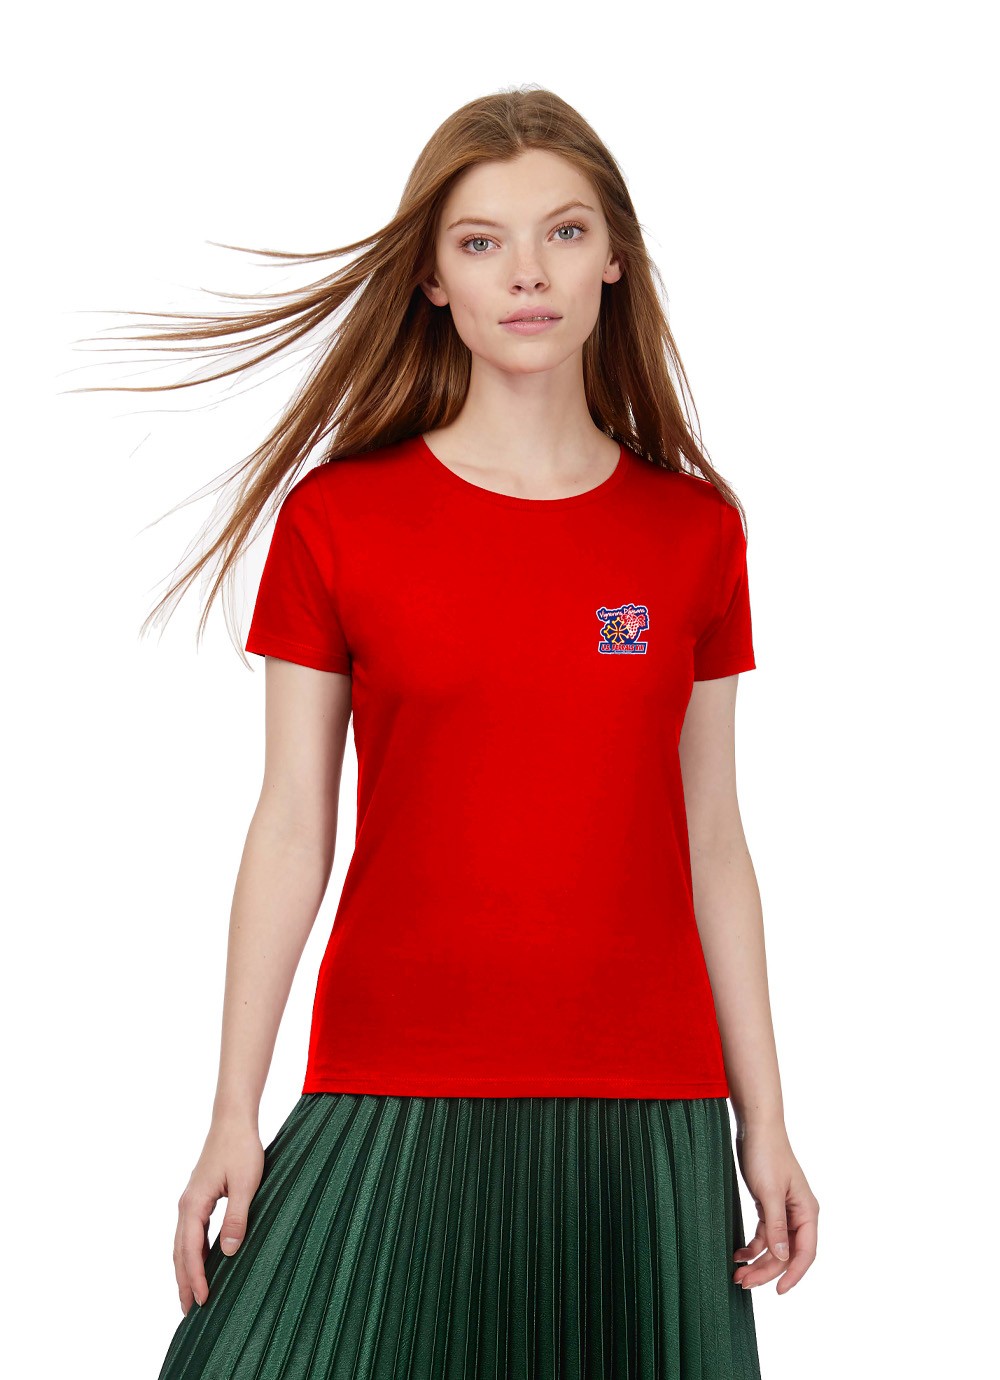 Tshirt femme US Ferrals XIII rouge